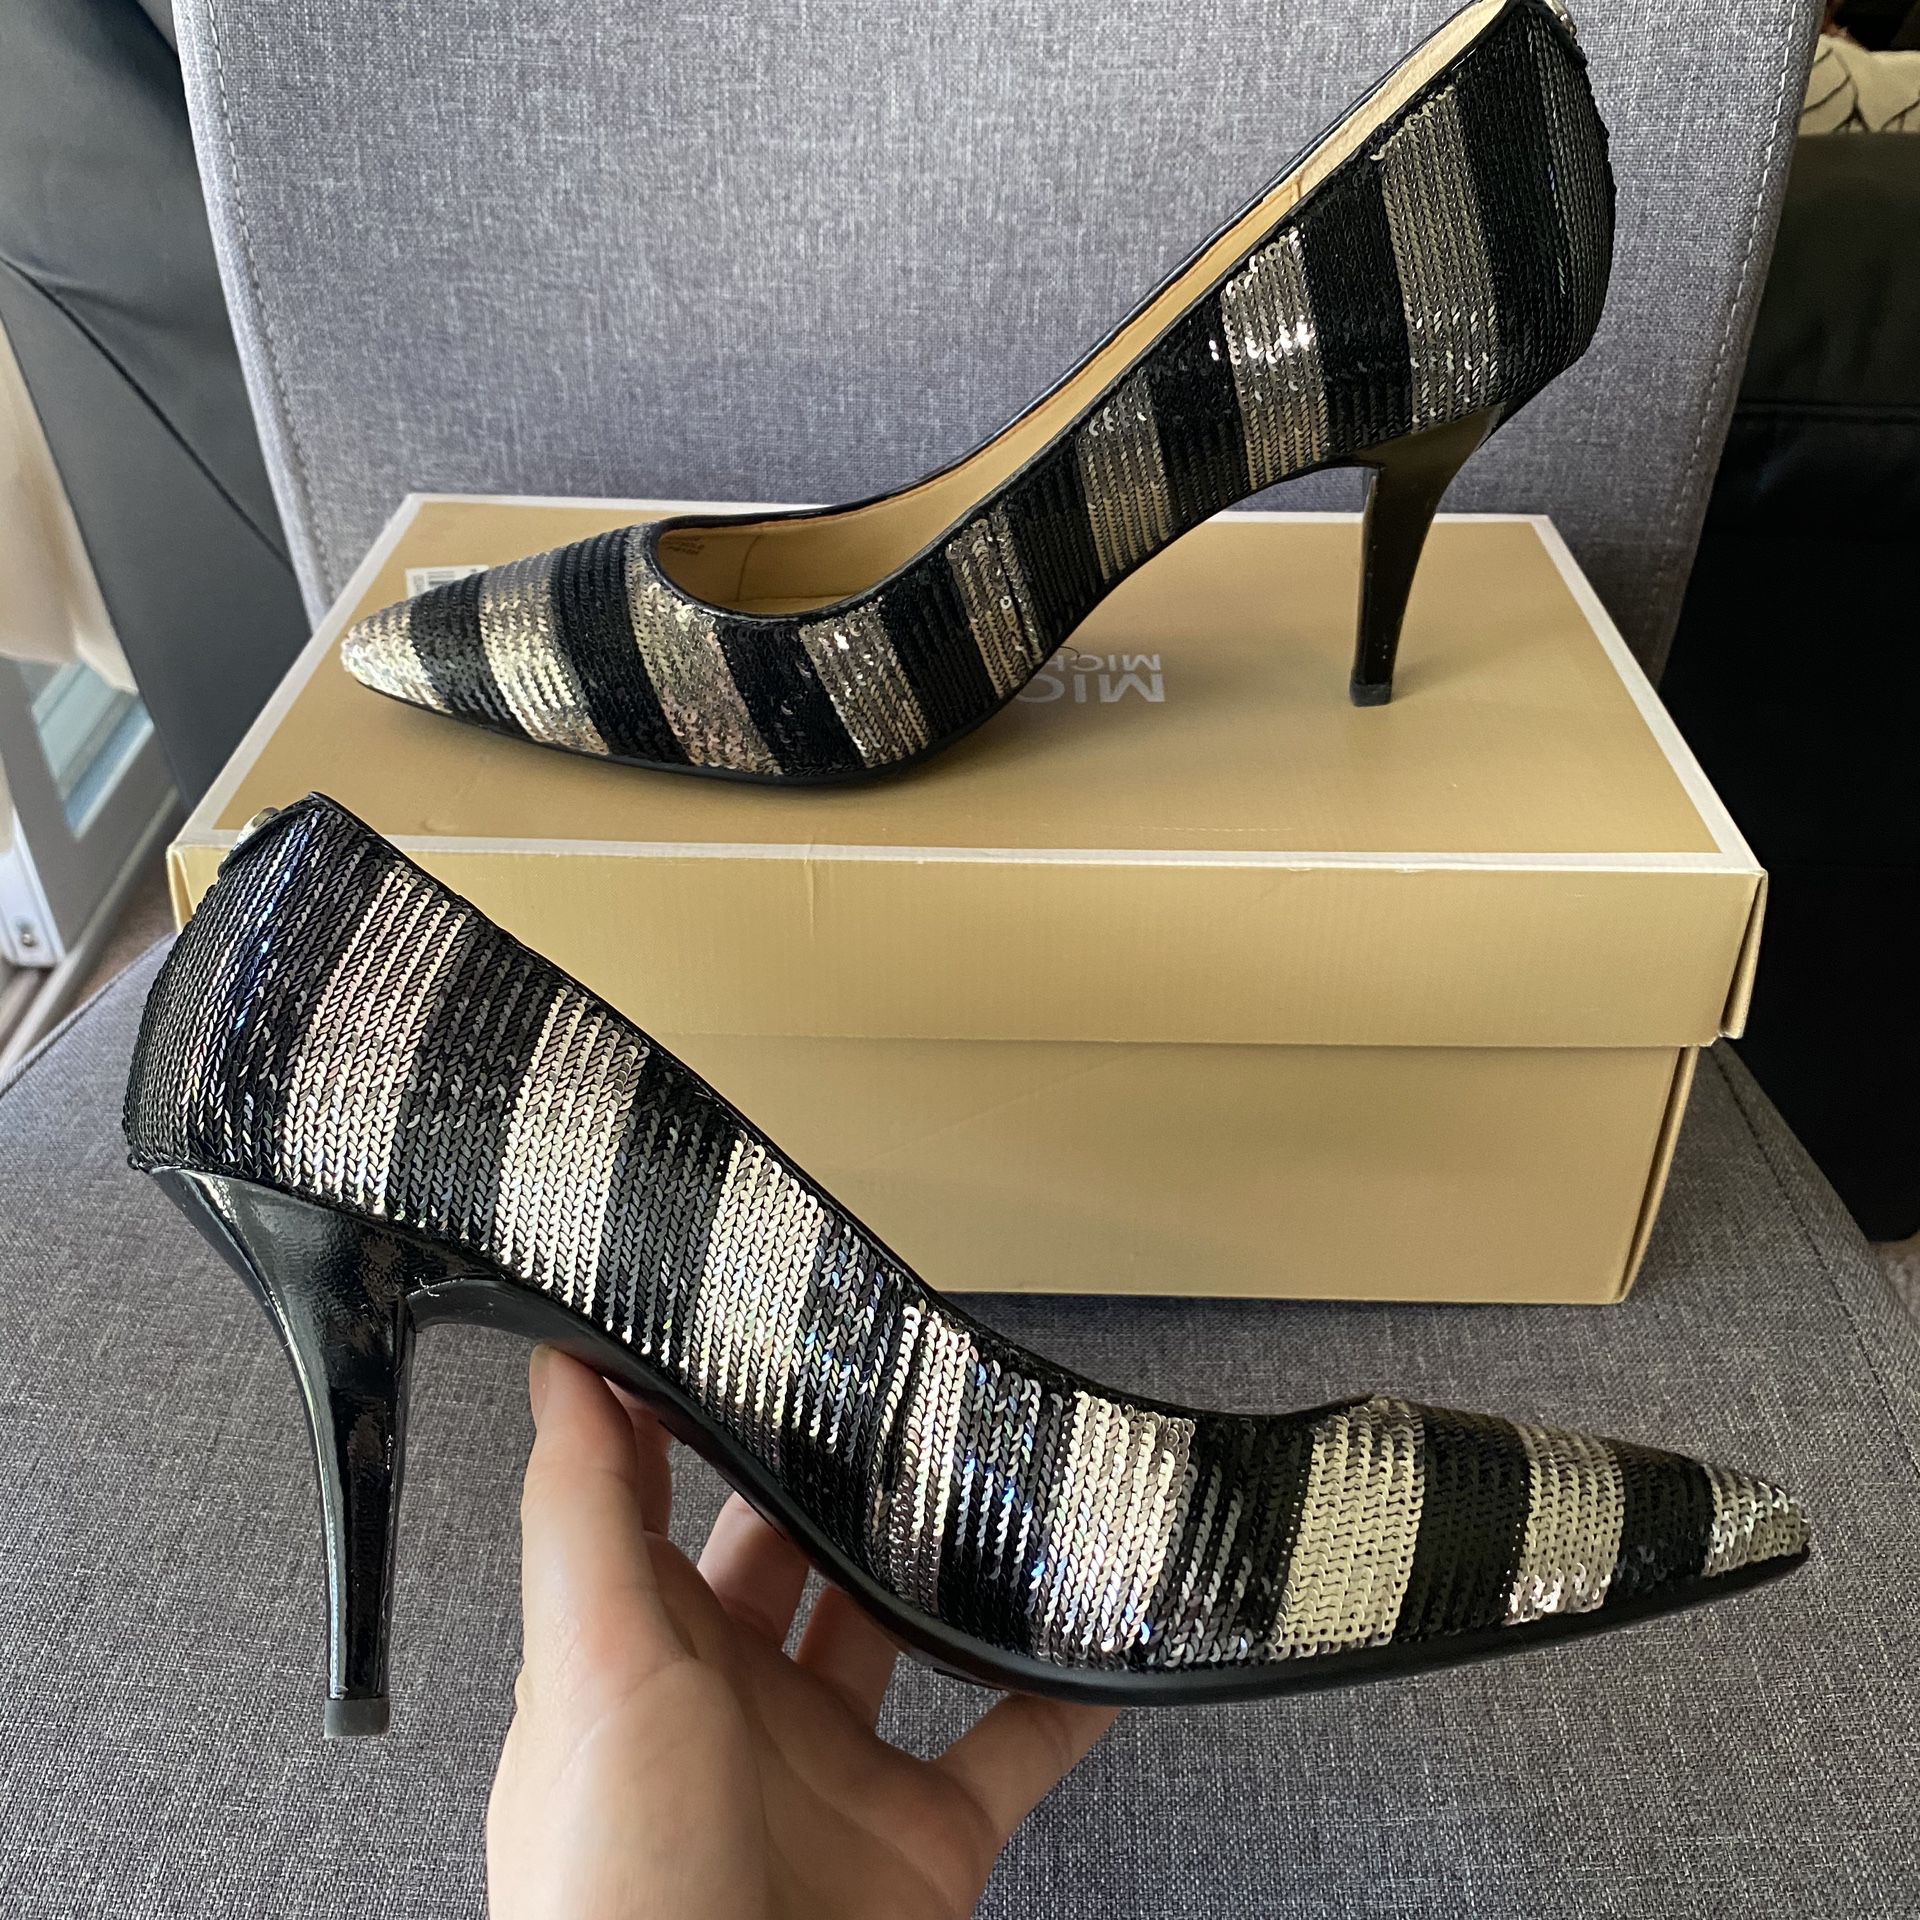 Michael Kors Glitter heels pumps size 8